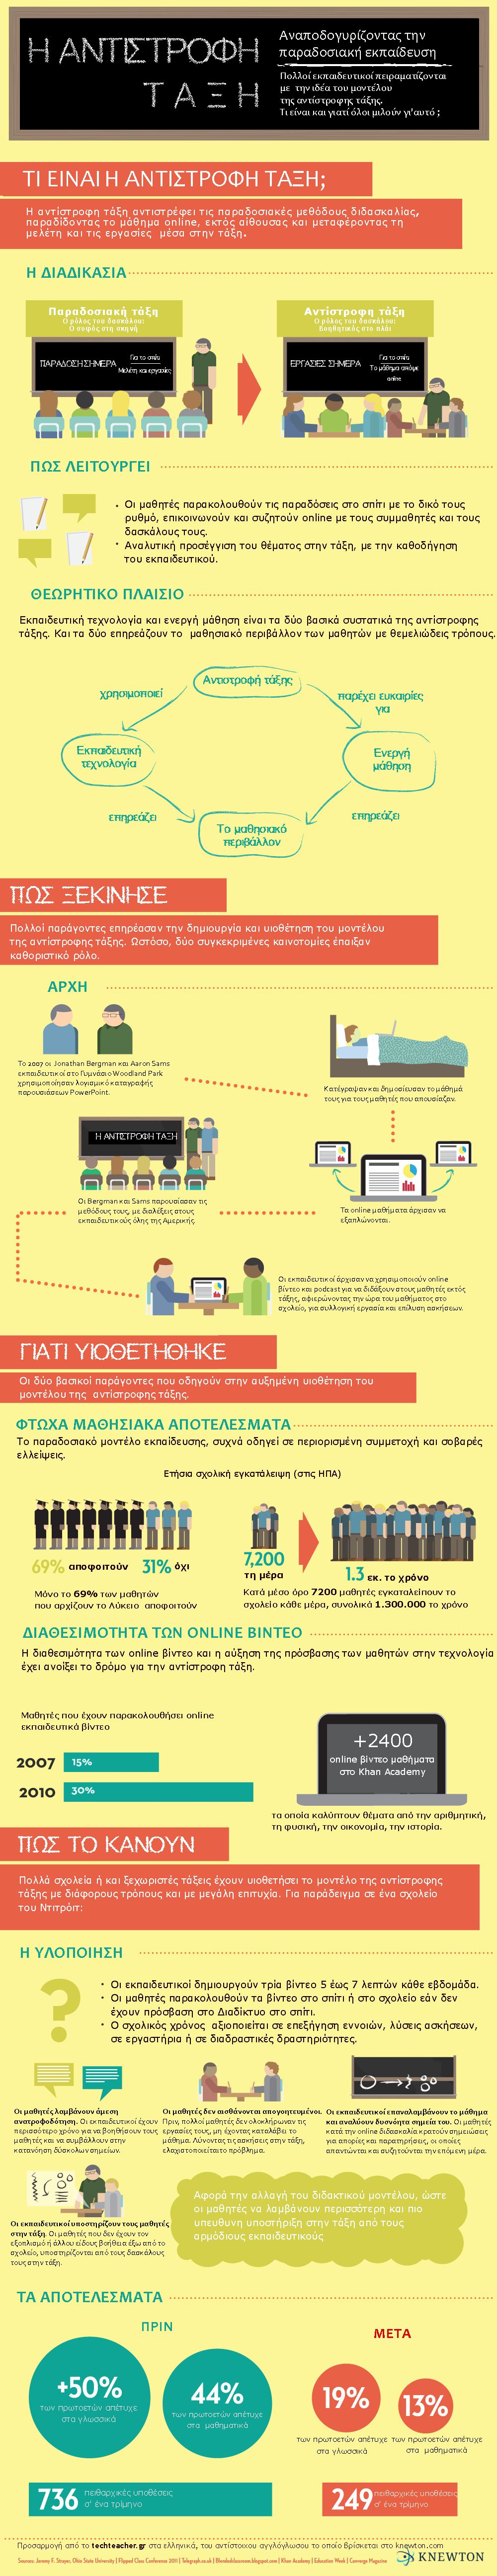 flipped-classroom-infographic-greek